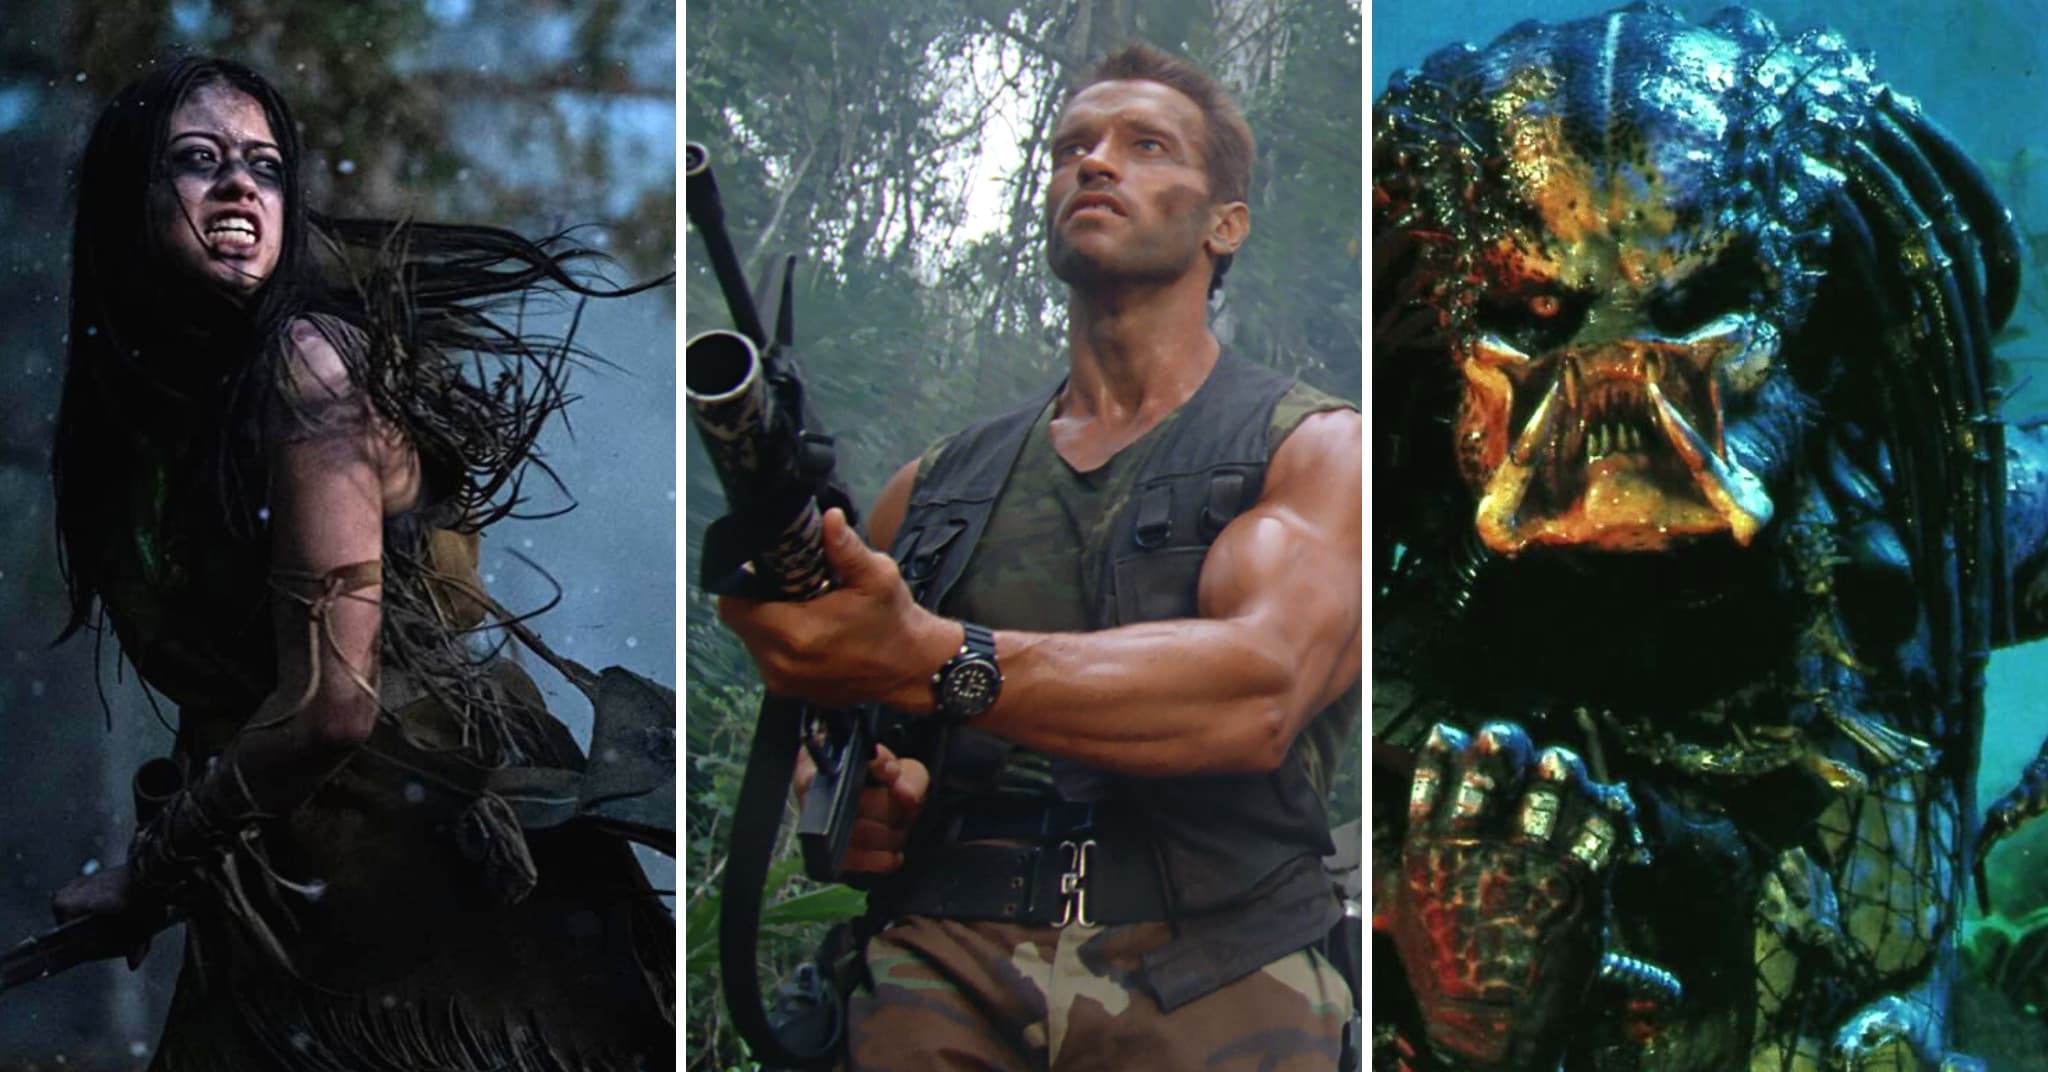 A Timeline Of The Predator Film Franchise